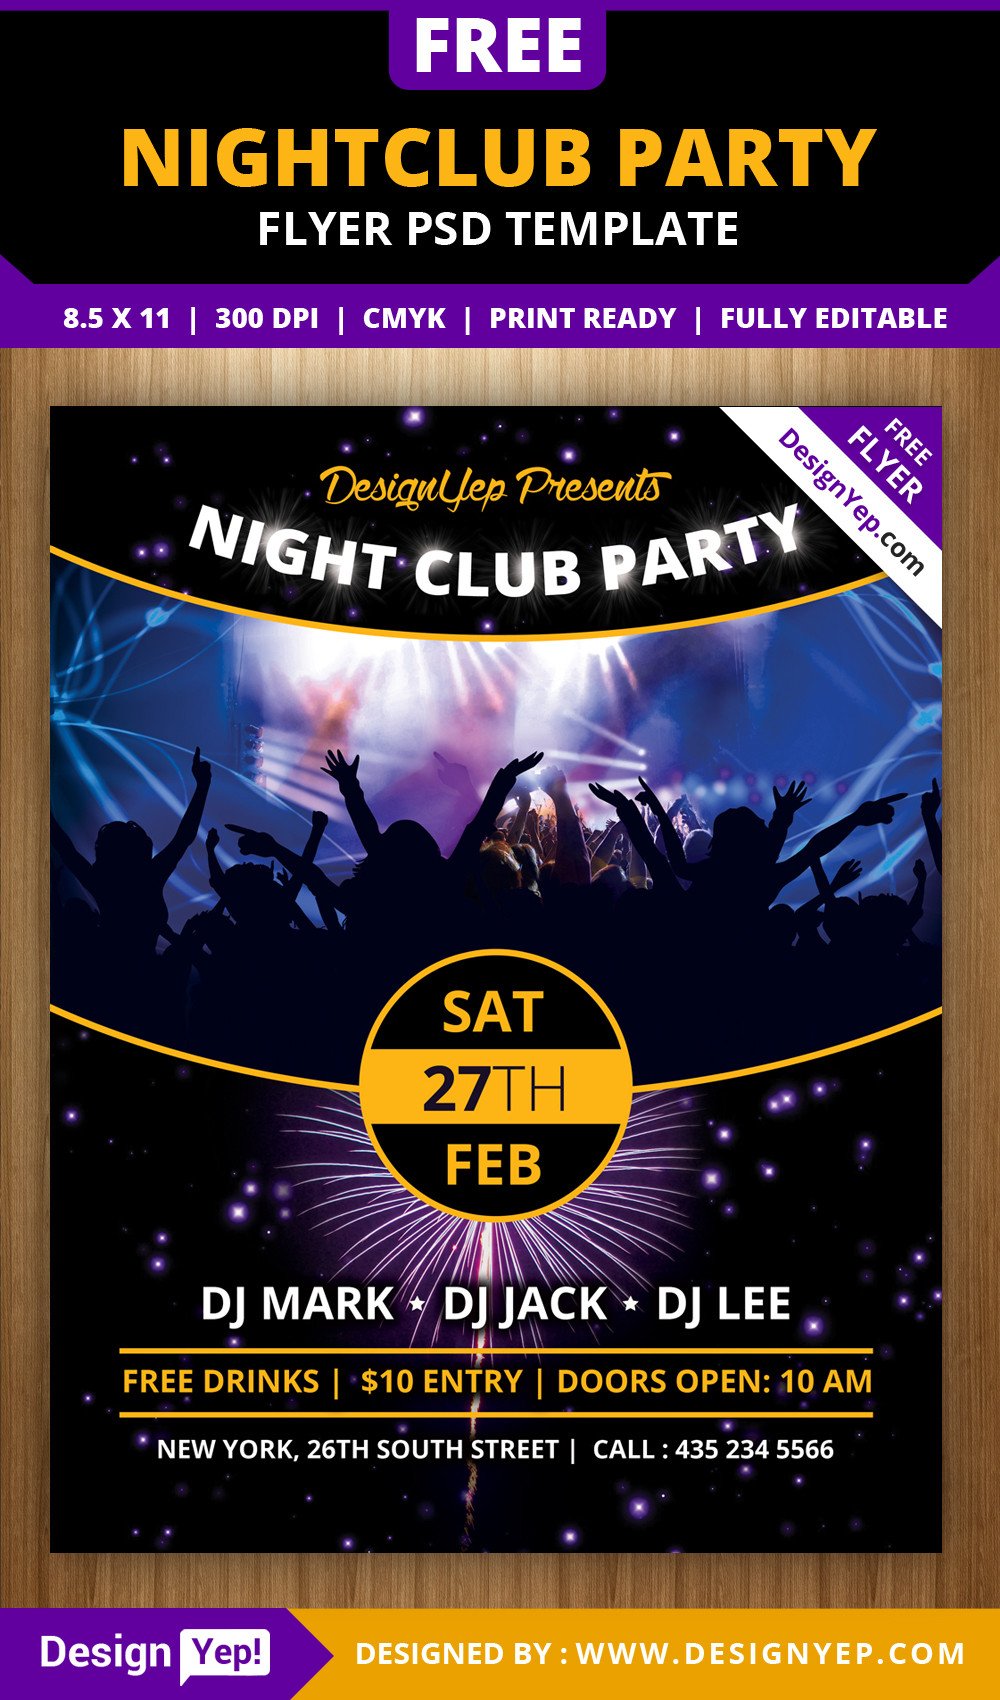 Free Nightclub Party Flyer PSD Template DesignYep